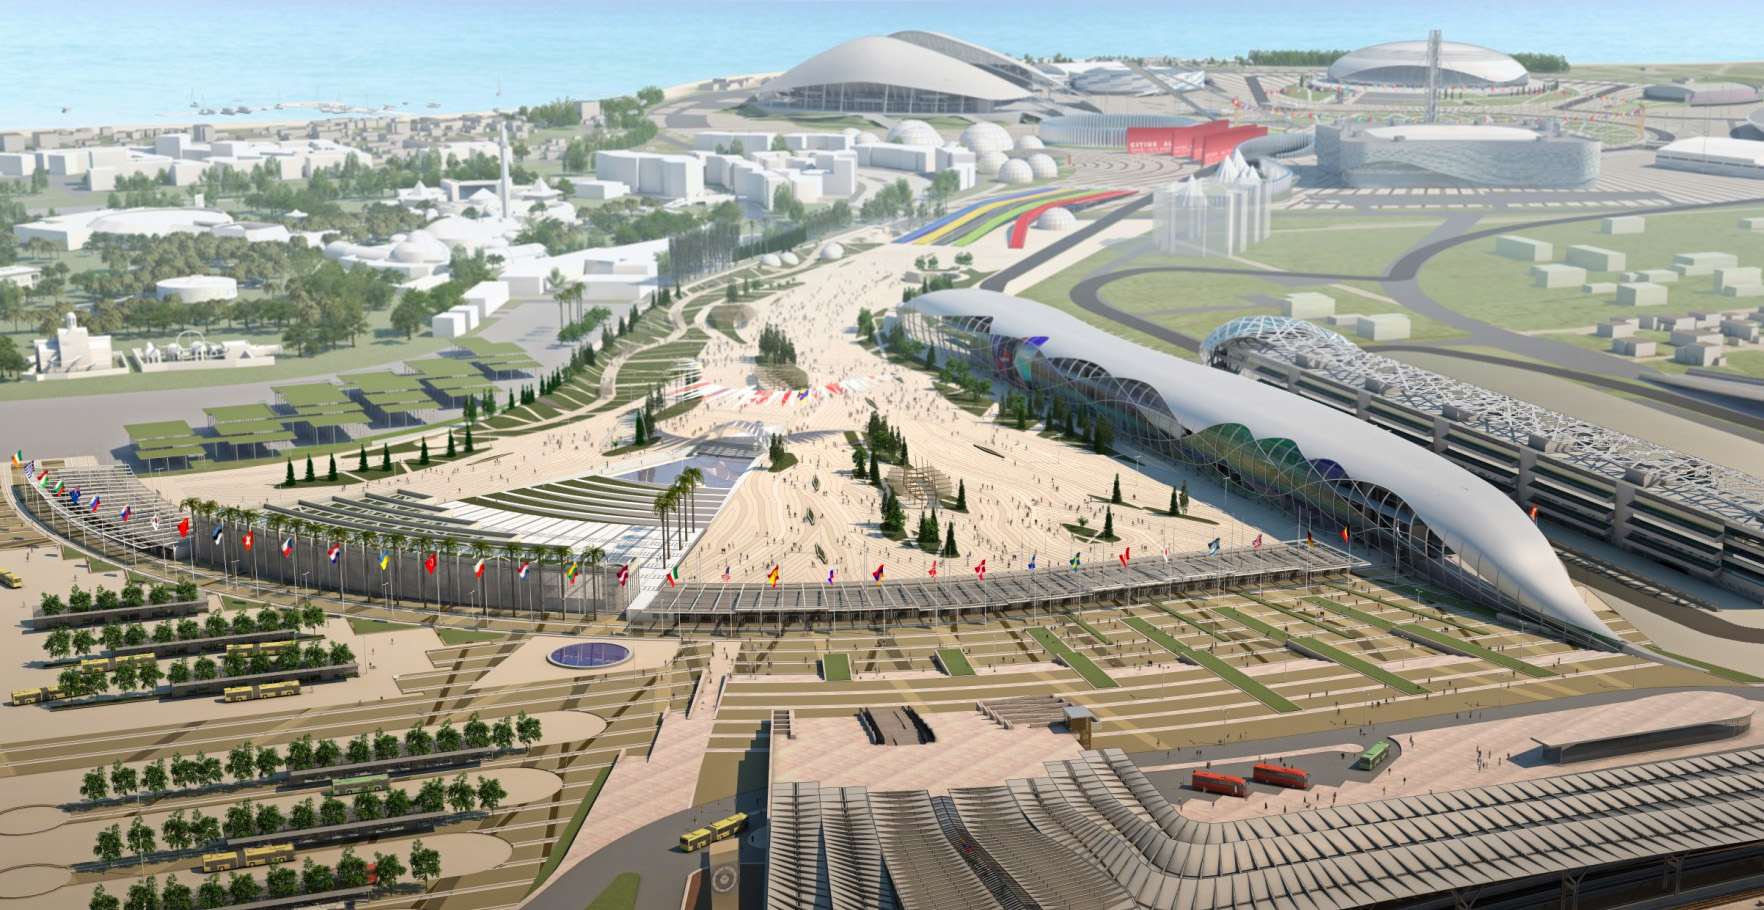 Станция олимпийский парк. Вокзал Олимпийский парк. Здание оргкомитет Сочи. Олимпийский стройка. Гоночные машин в Олимпийском парке Сочи.